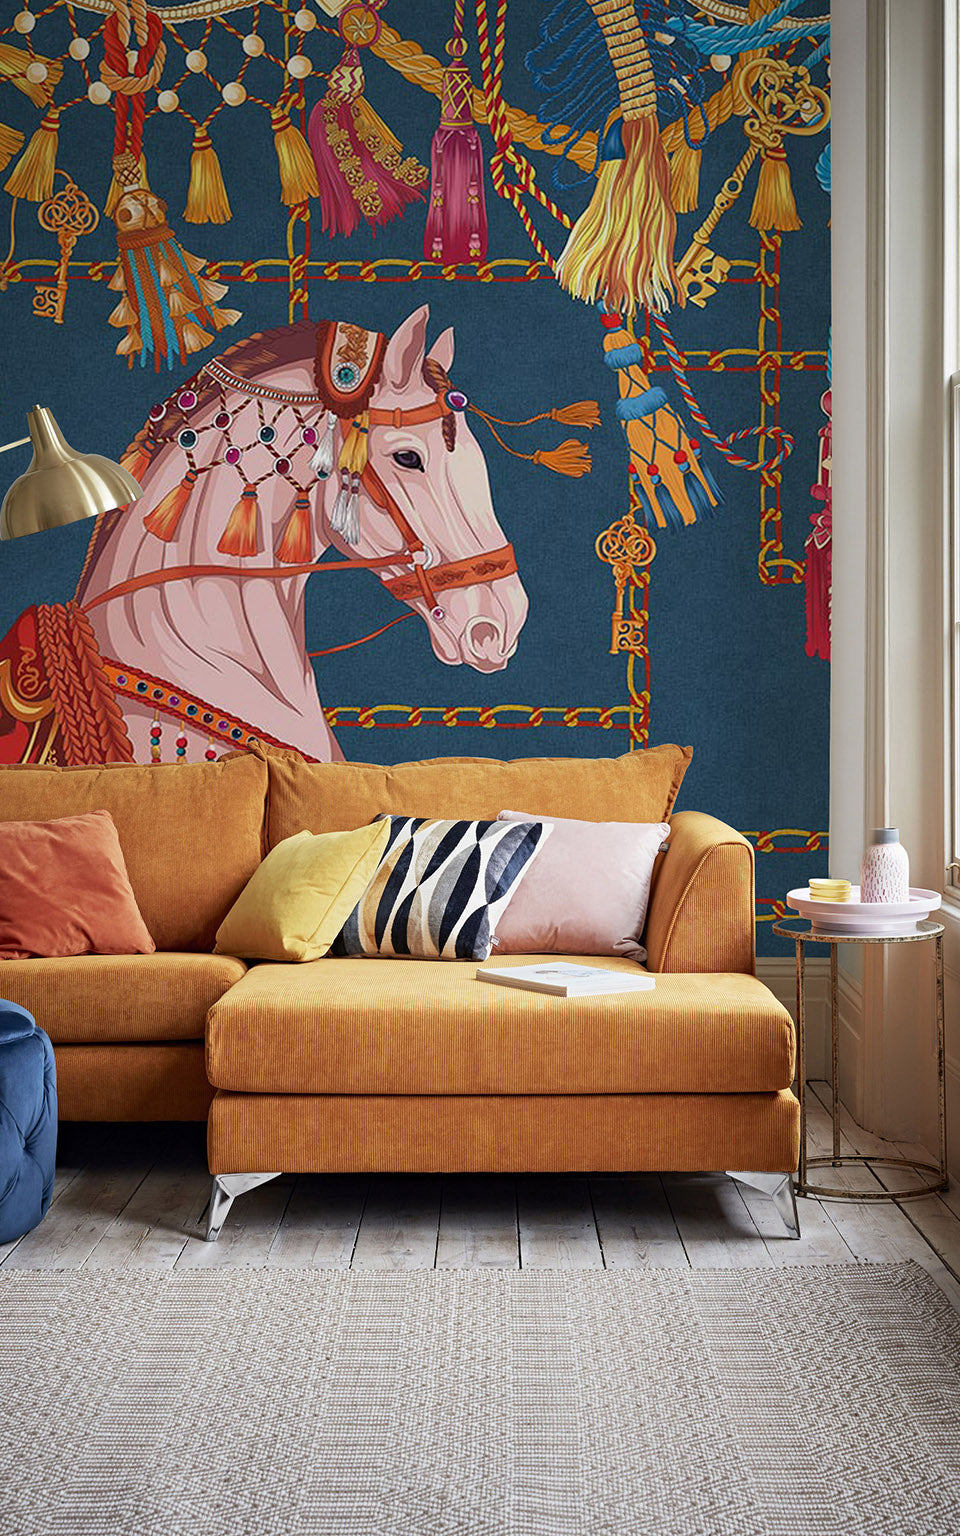 Prancing Black Horse Animal Full Wall Mural Photo Wallpaper Print Home 3D  Decal | eBay